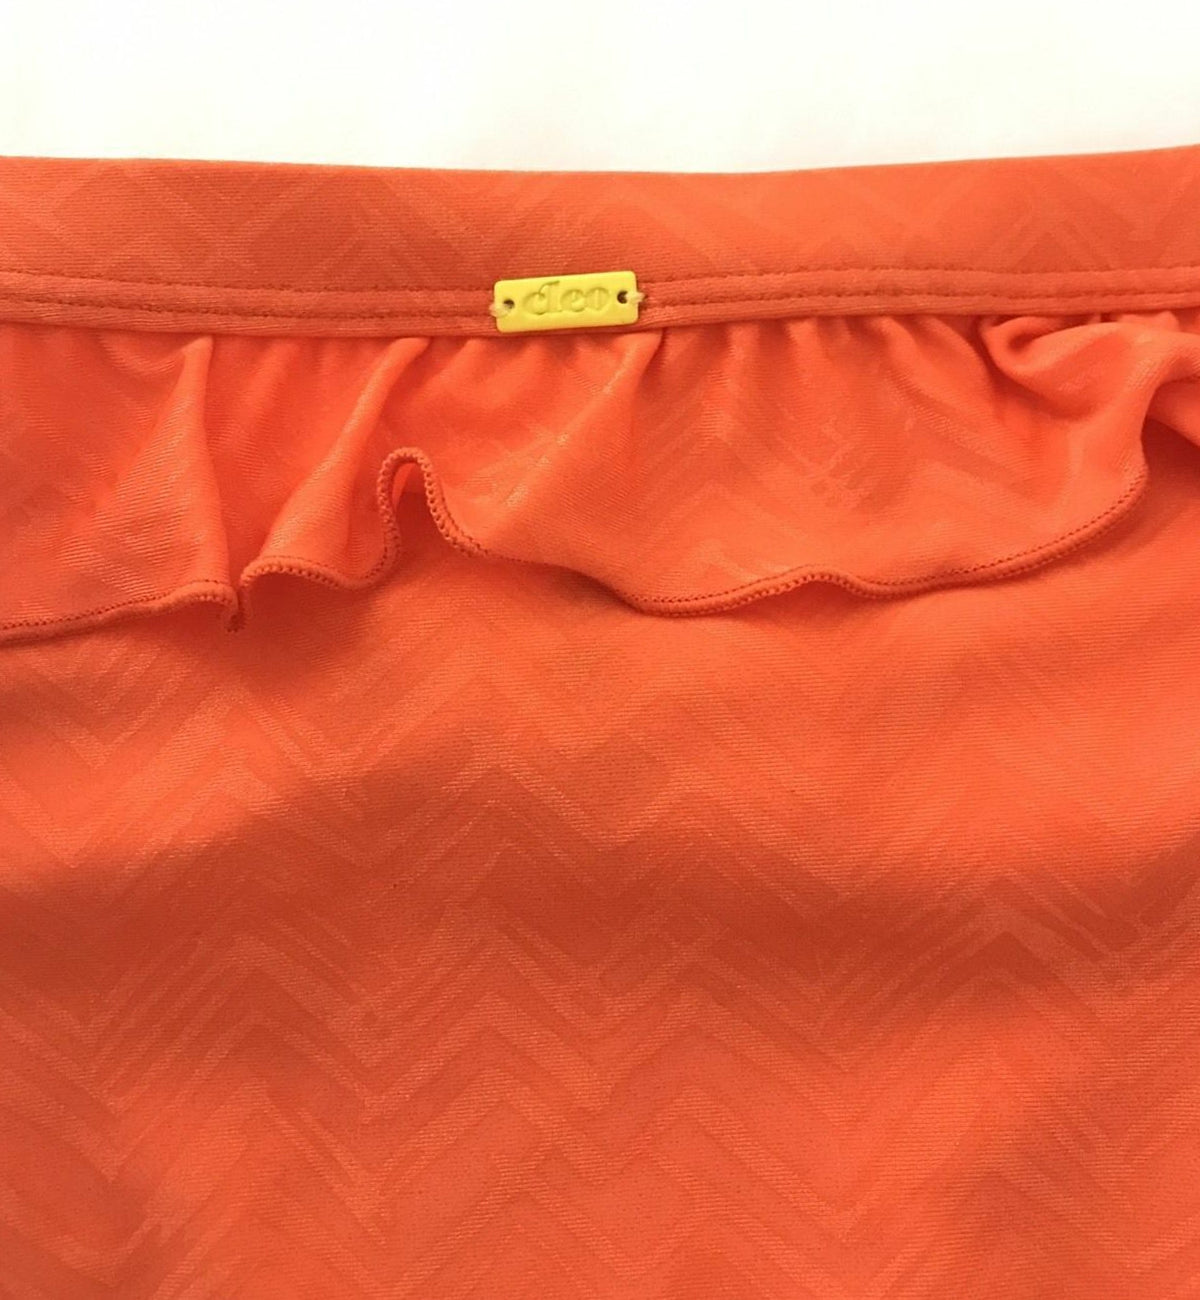 Cleo by Panache Rita Frill Bikini Brief (CW0129),XS,Orange Print - Orange Print,XS